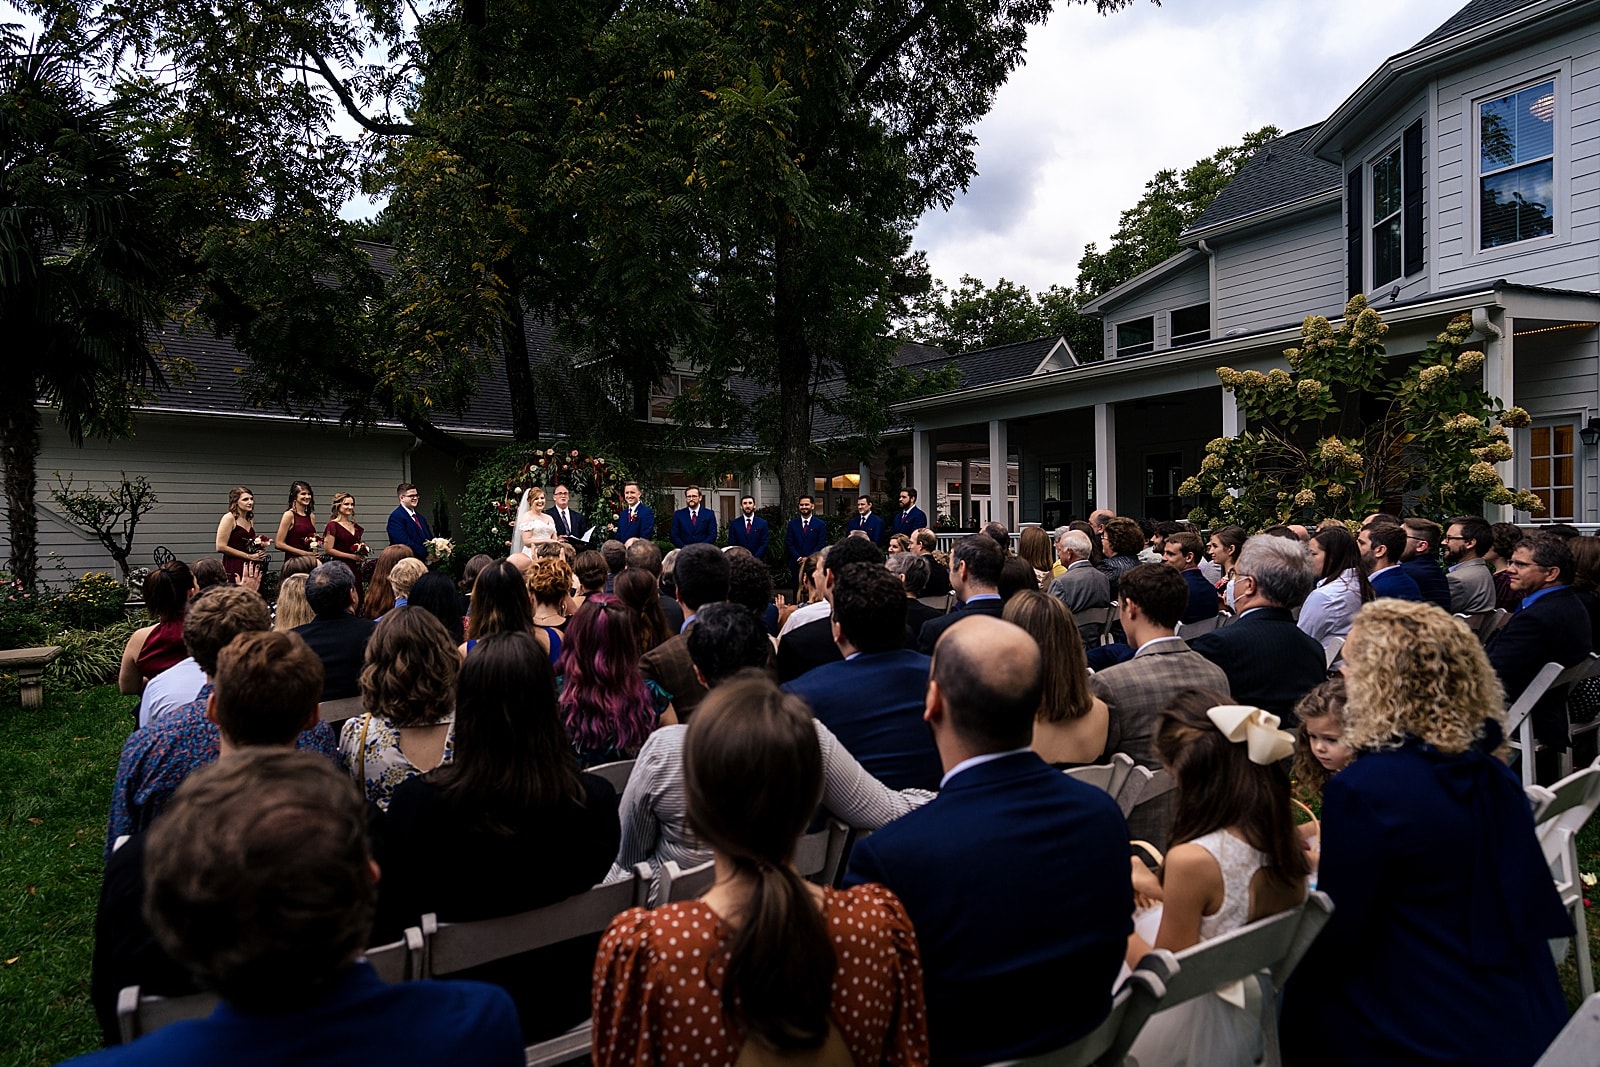 Outdoor wedding ceremony at Matthews House